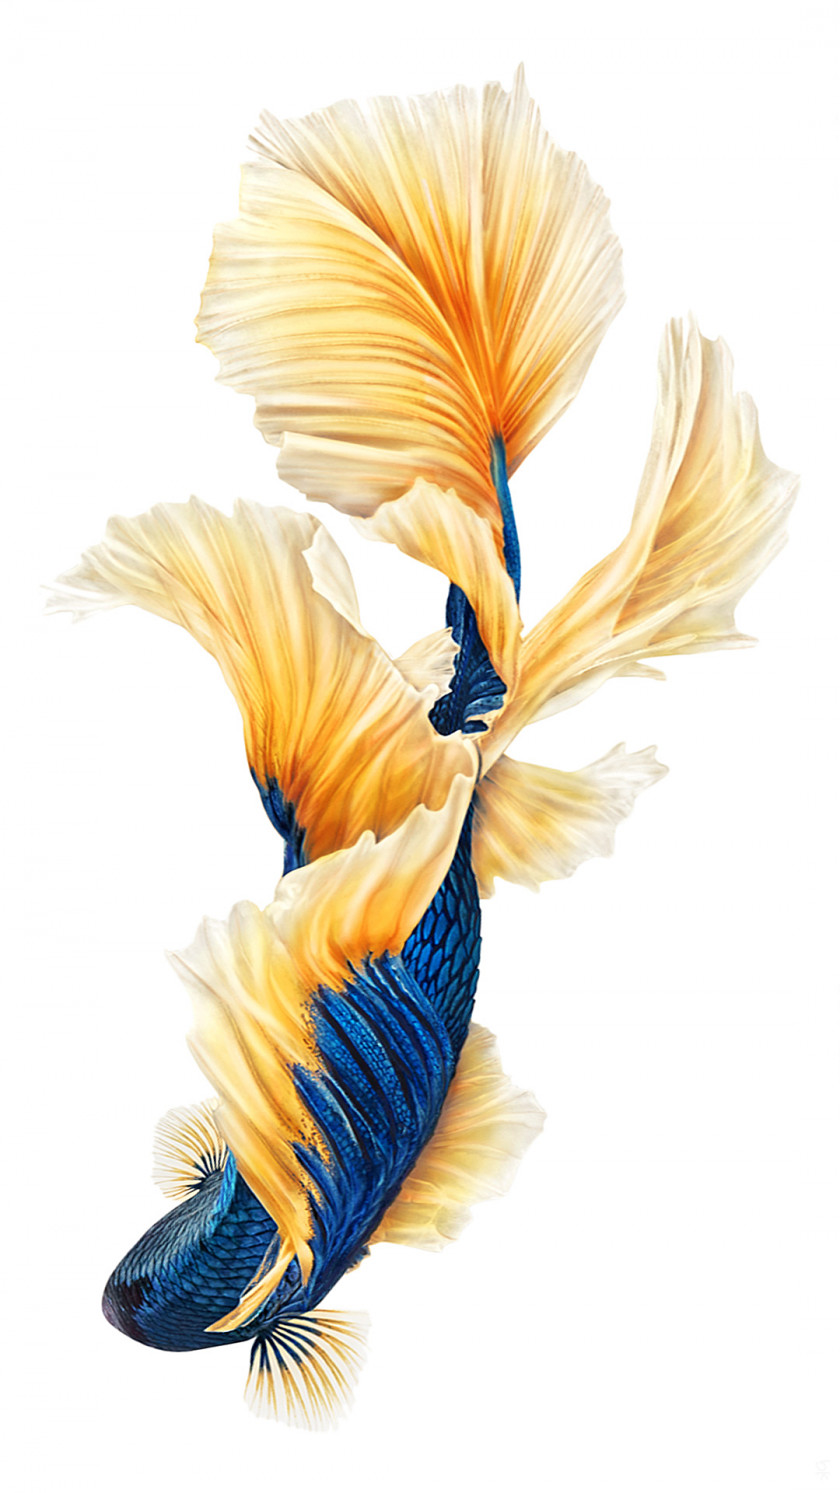 Fly IPhone 6s Plus 7 Siamese Fighting Fish Desktop Wallpaper PNG